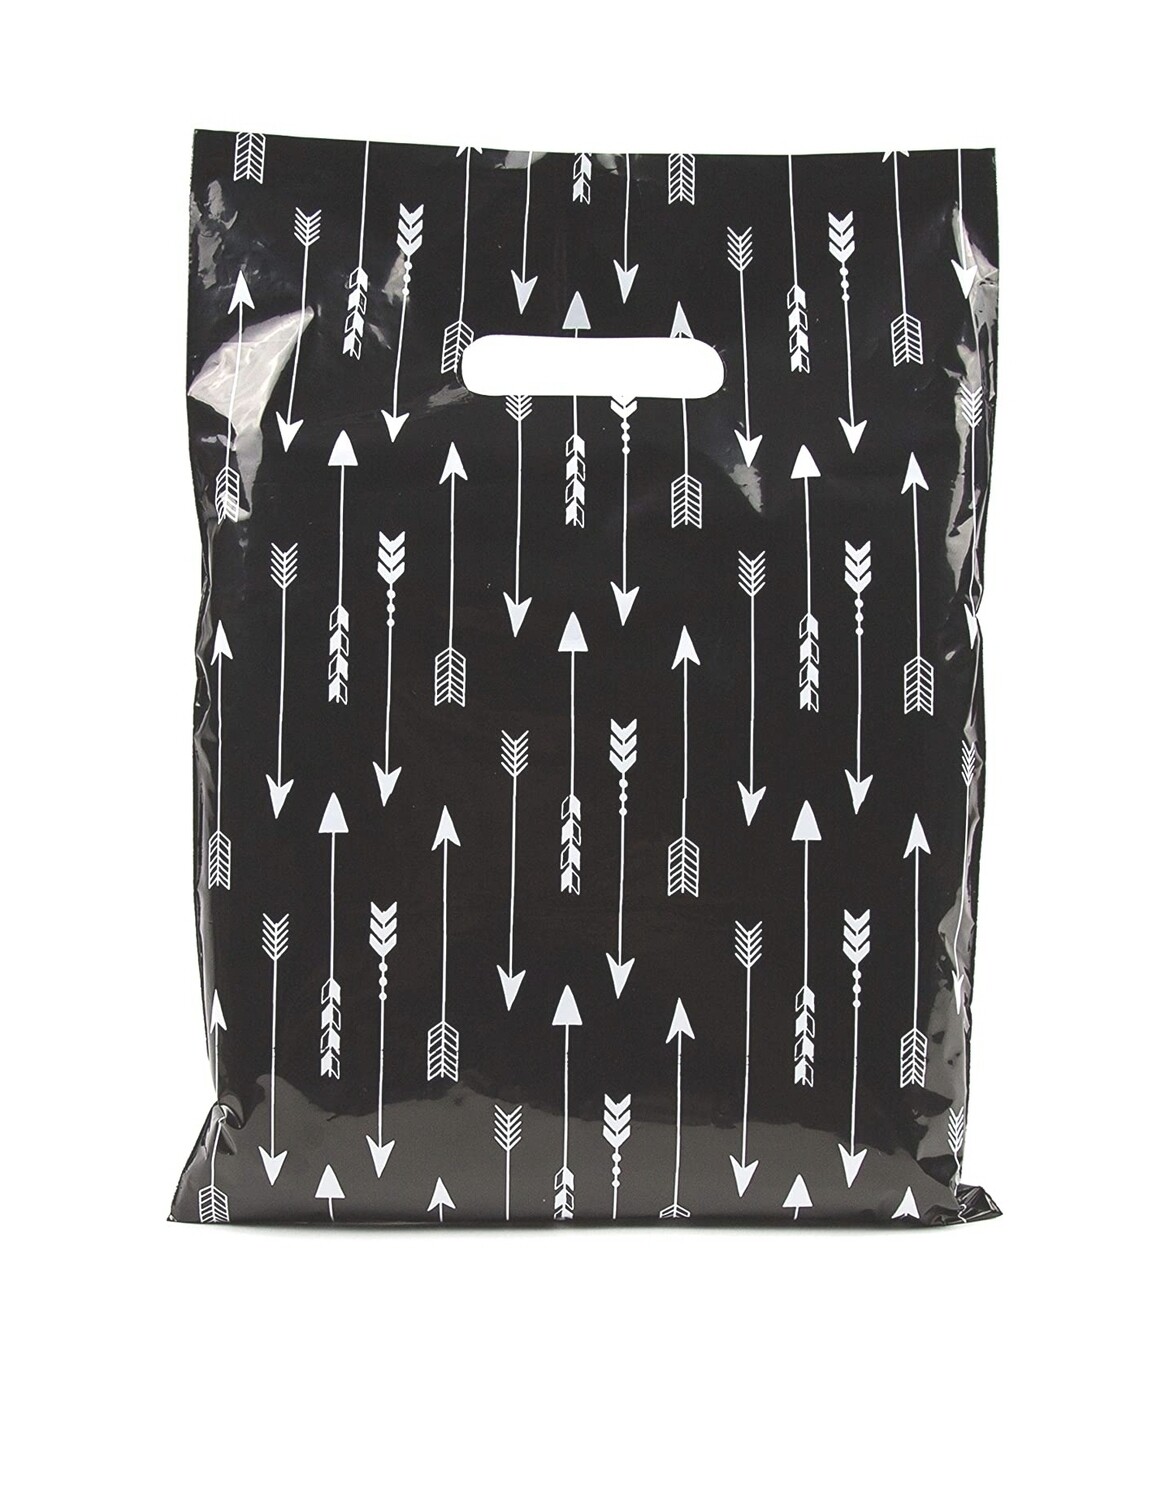 Merchandise Bags 9x12 - Tribal Arrows (Black)